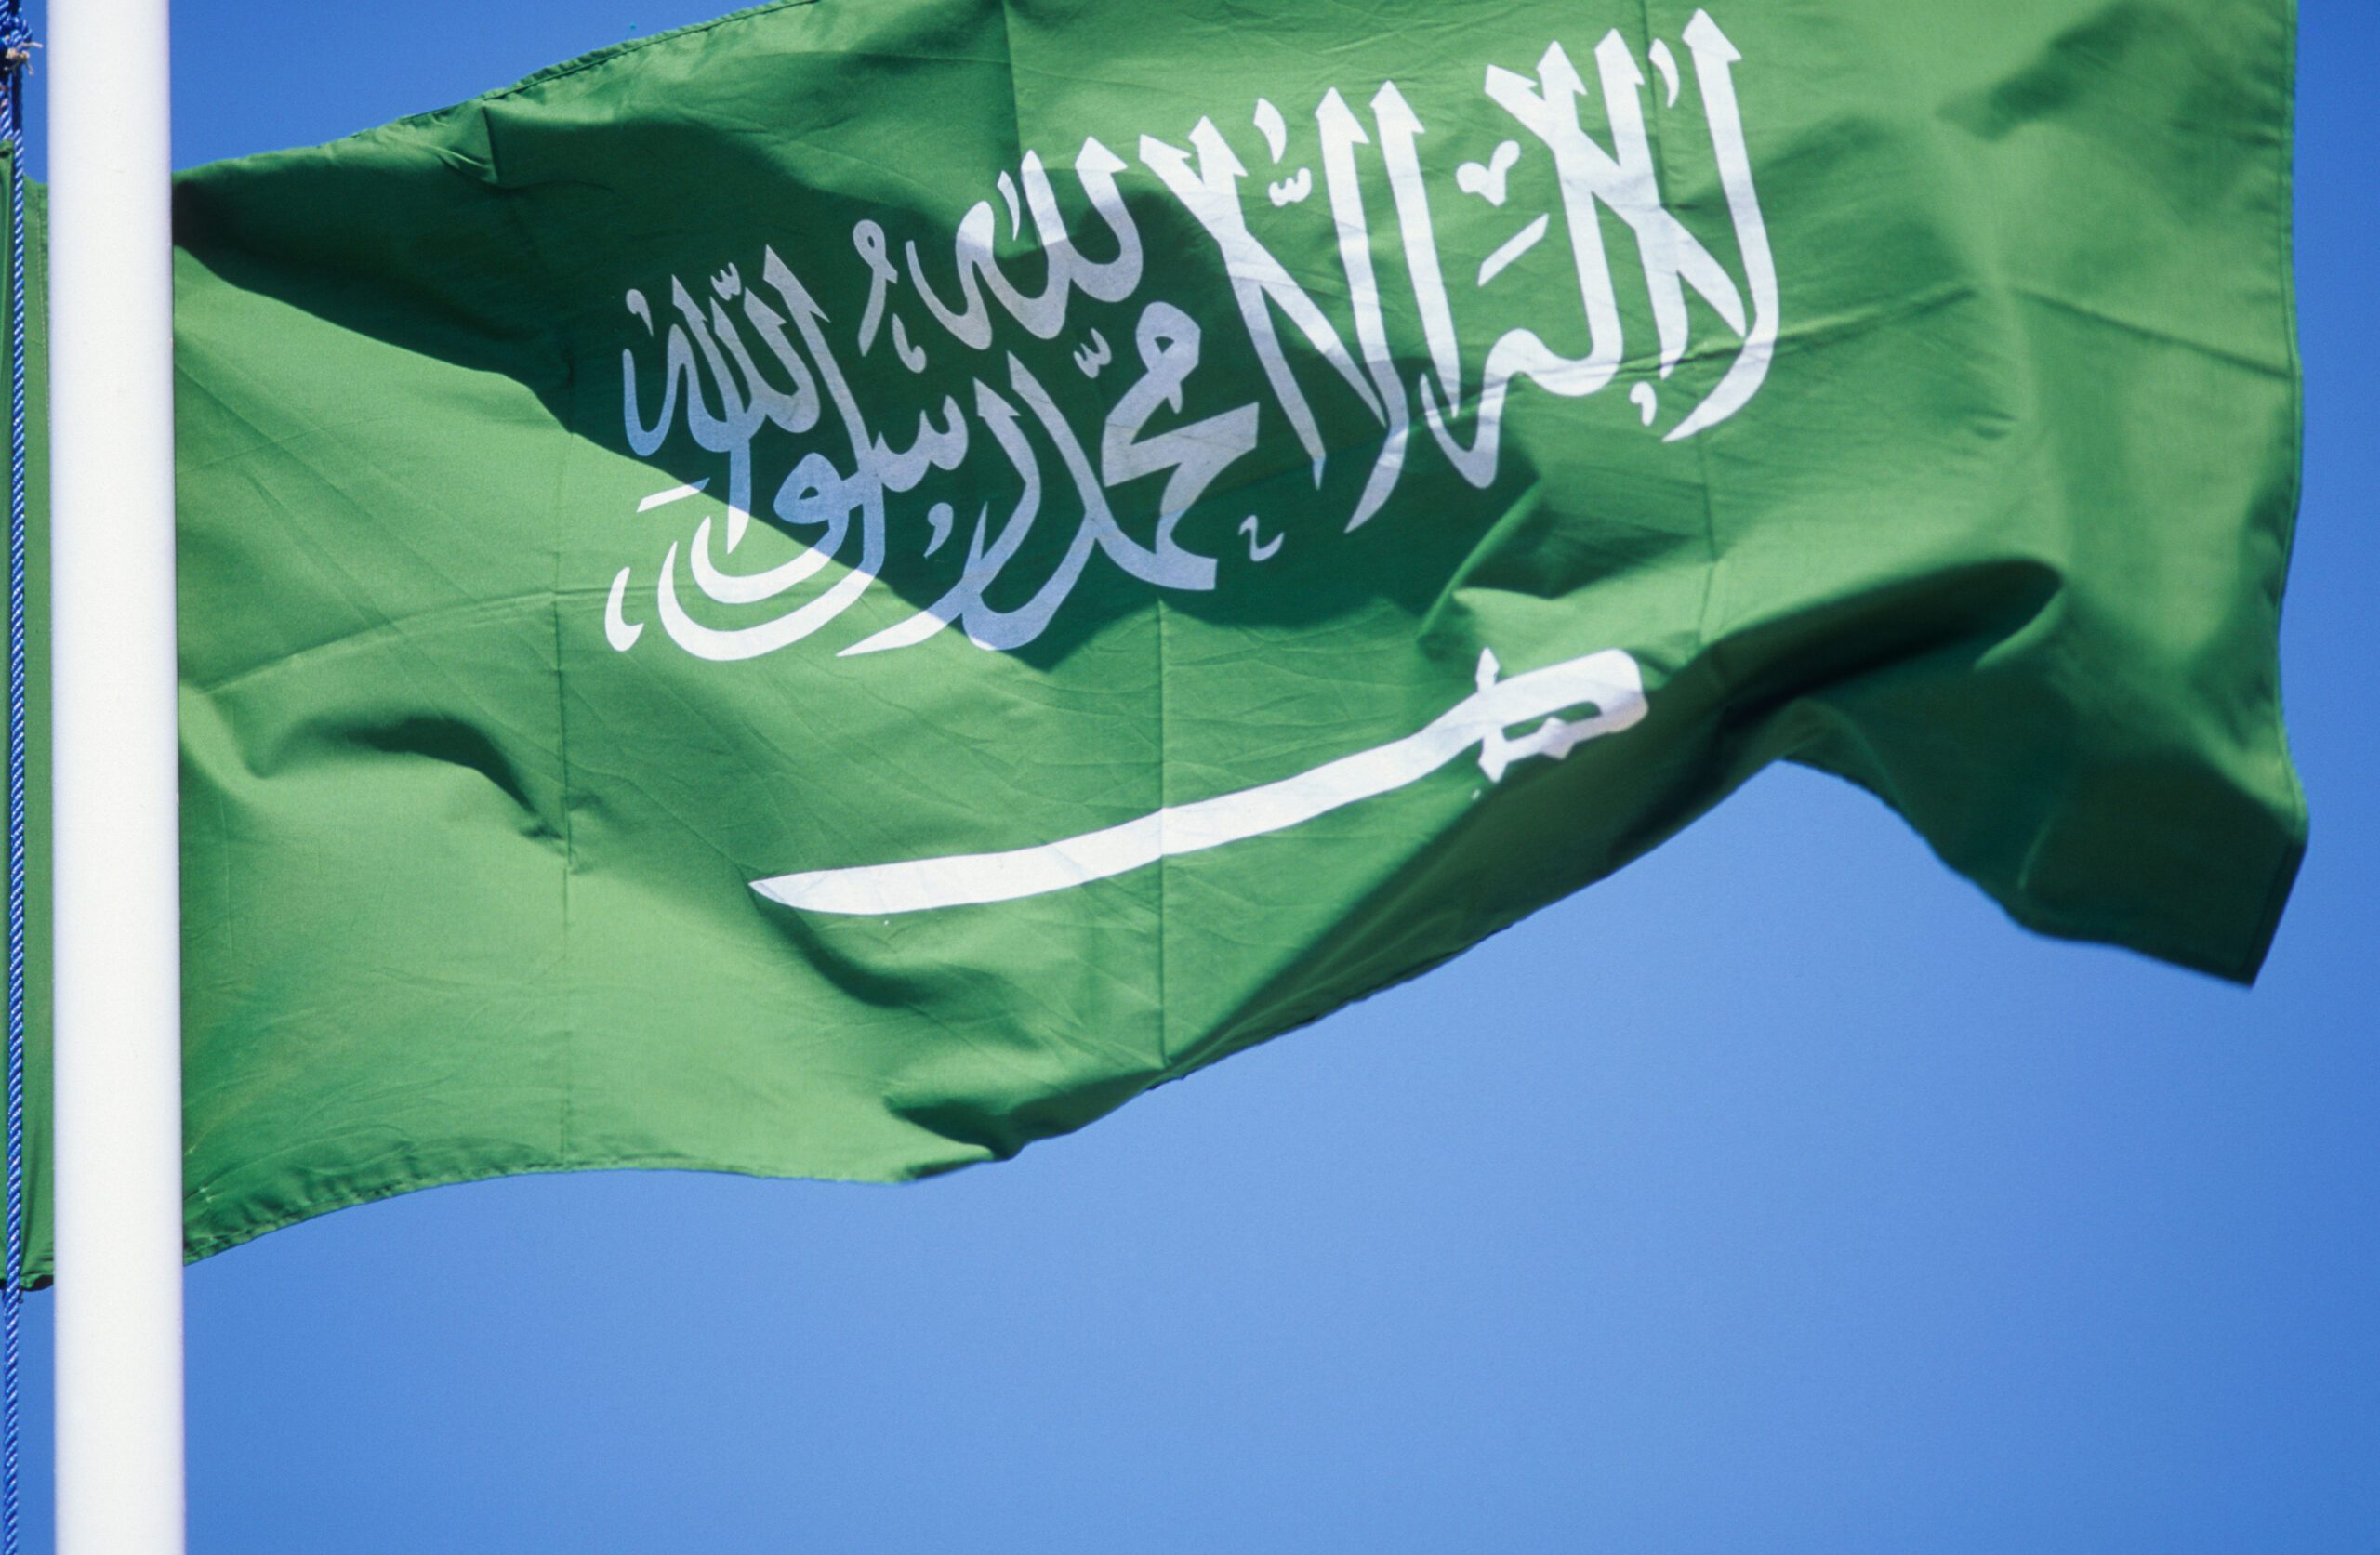 Cybersecurity Institute to Open in Saudi Arabia – Source: www.darkreading.com